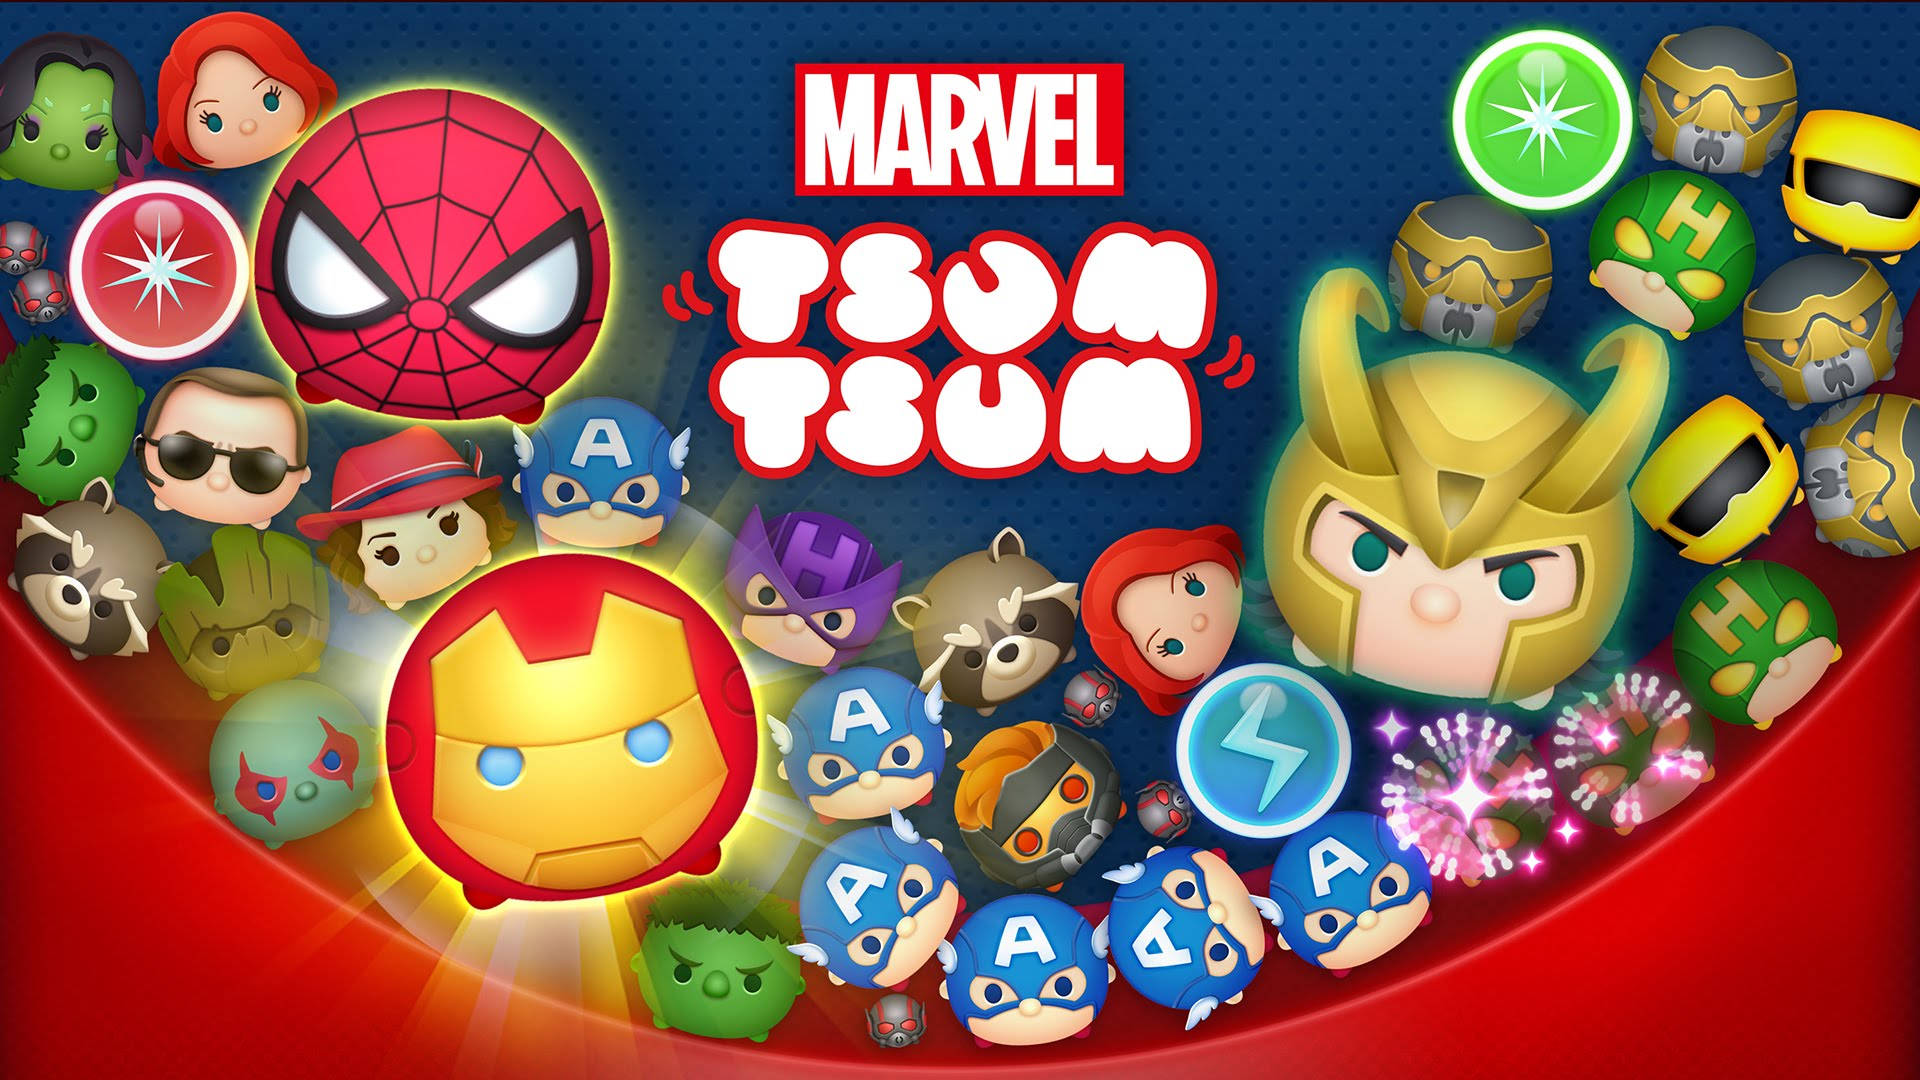 Download Tsum Tsum Marvel Wallpaper